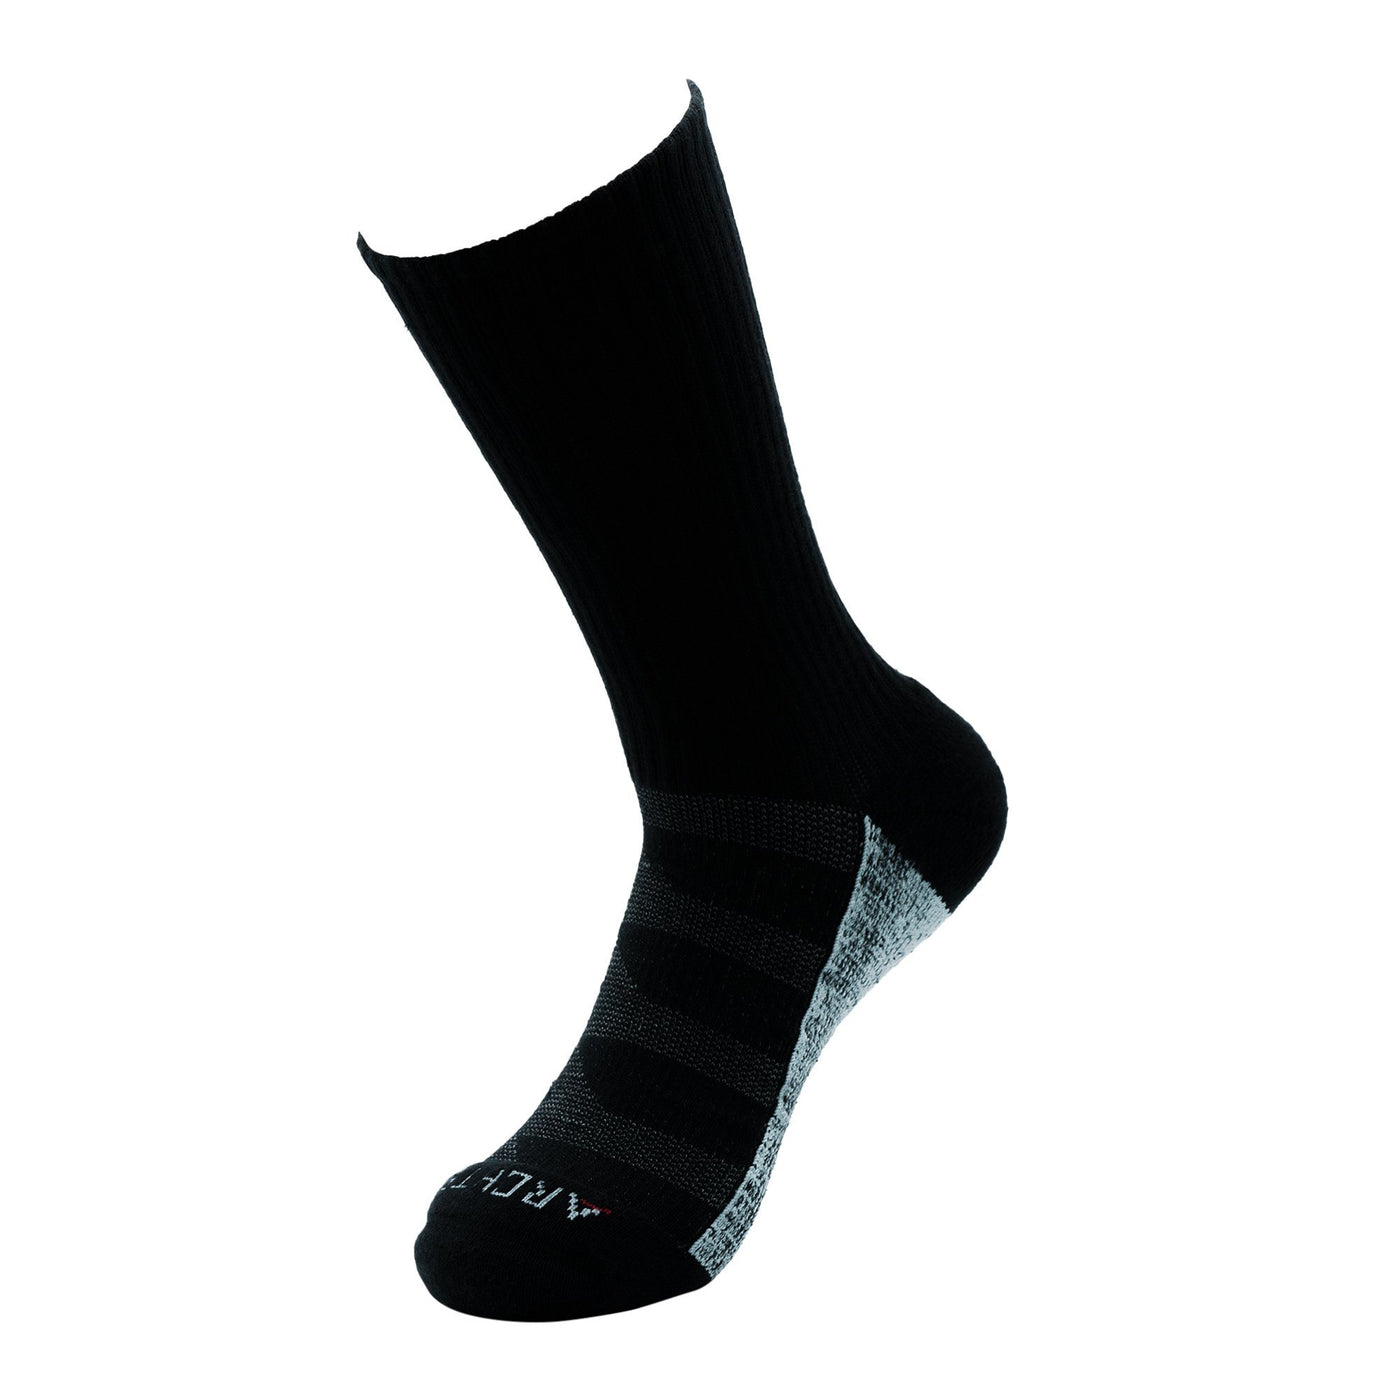 New Athletic Crew Sock 6-Pack in Black improved Version athletic socks ArchTek 